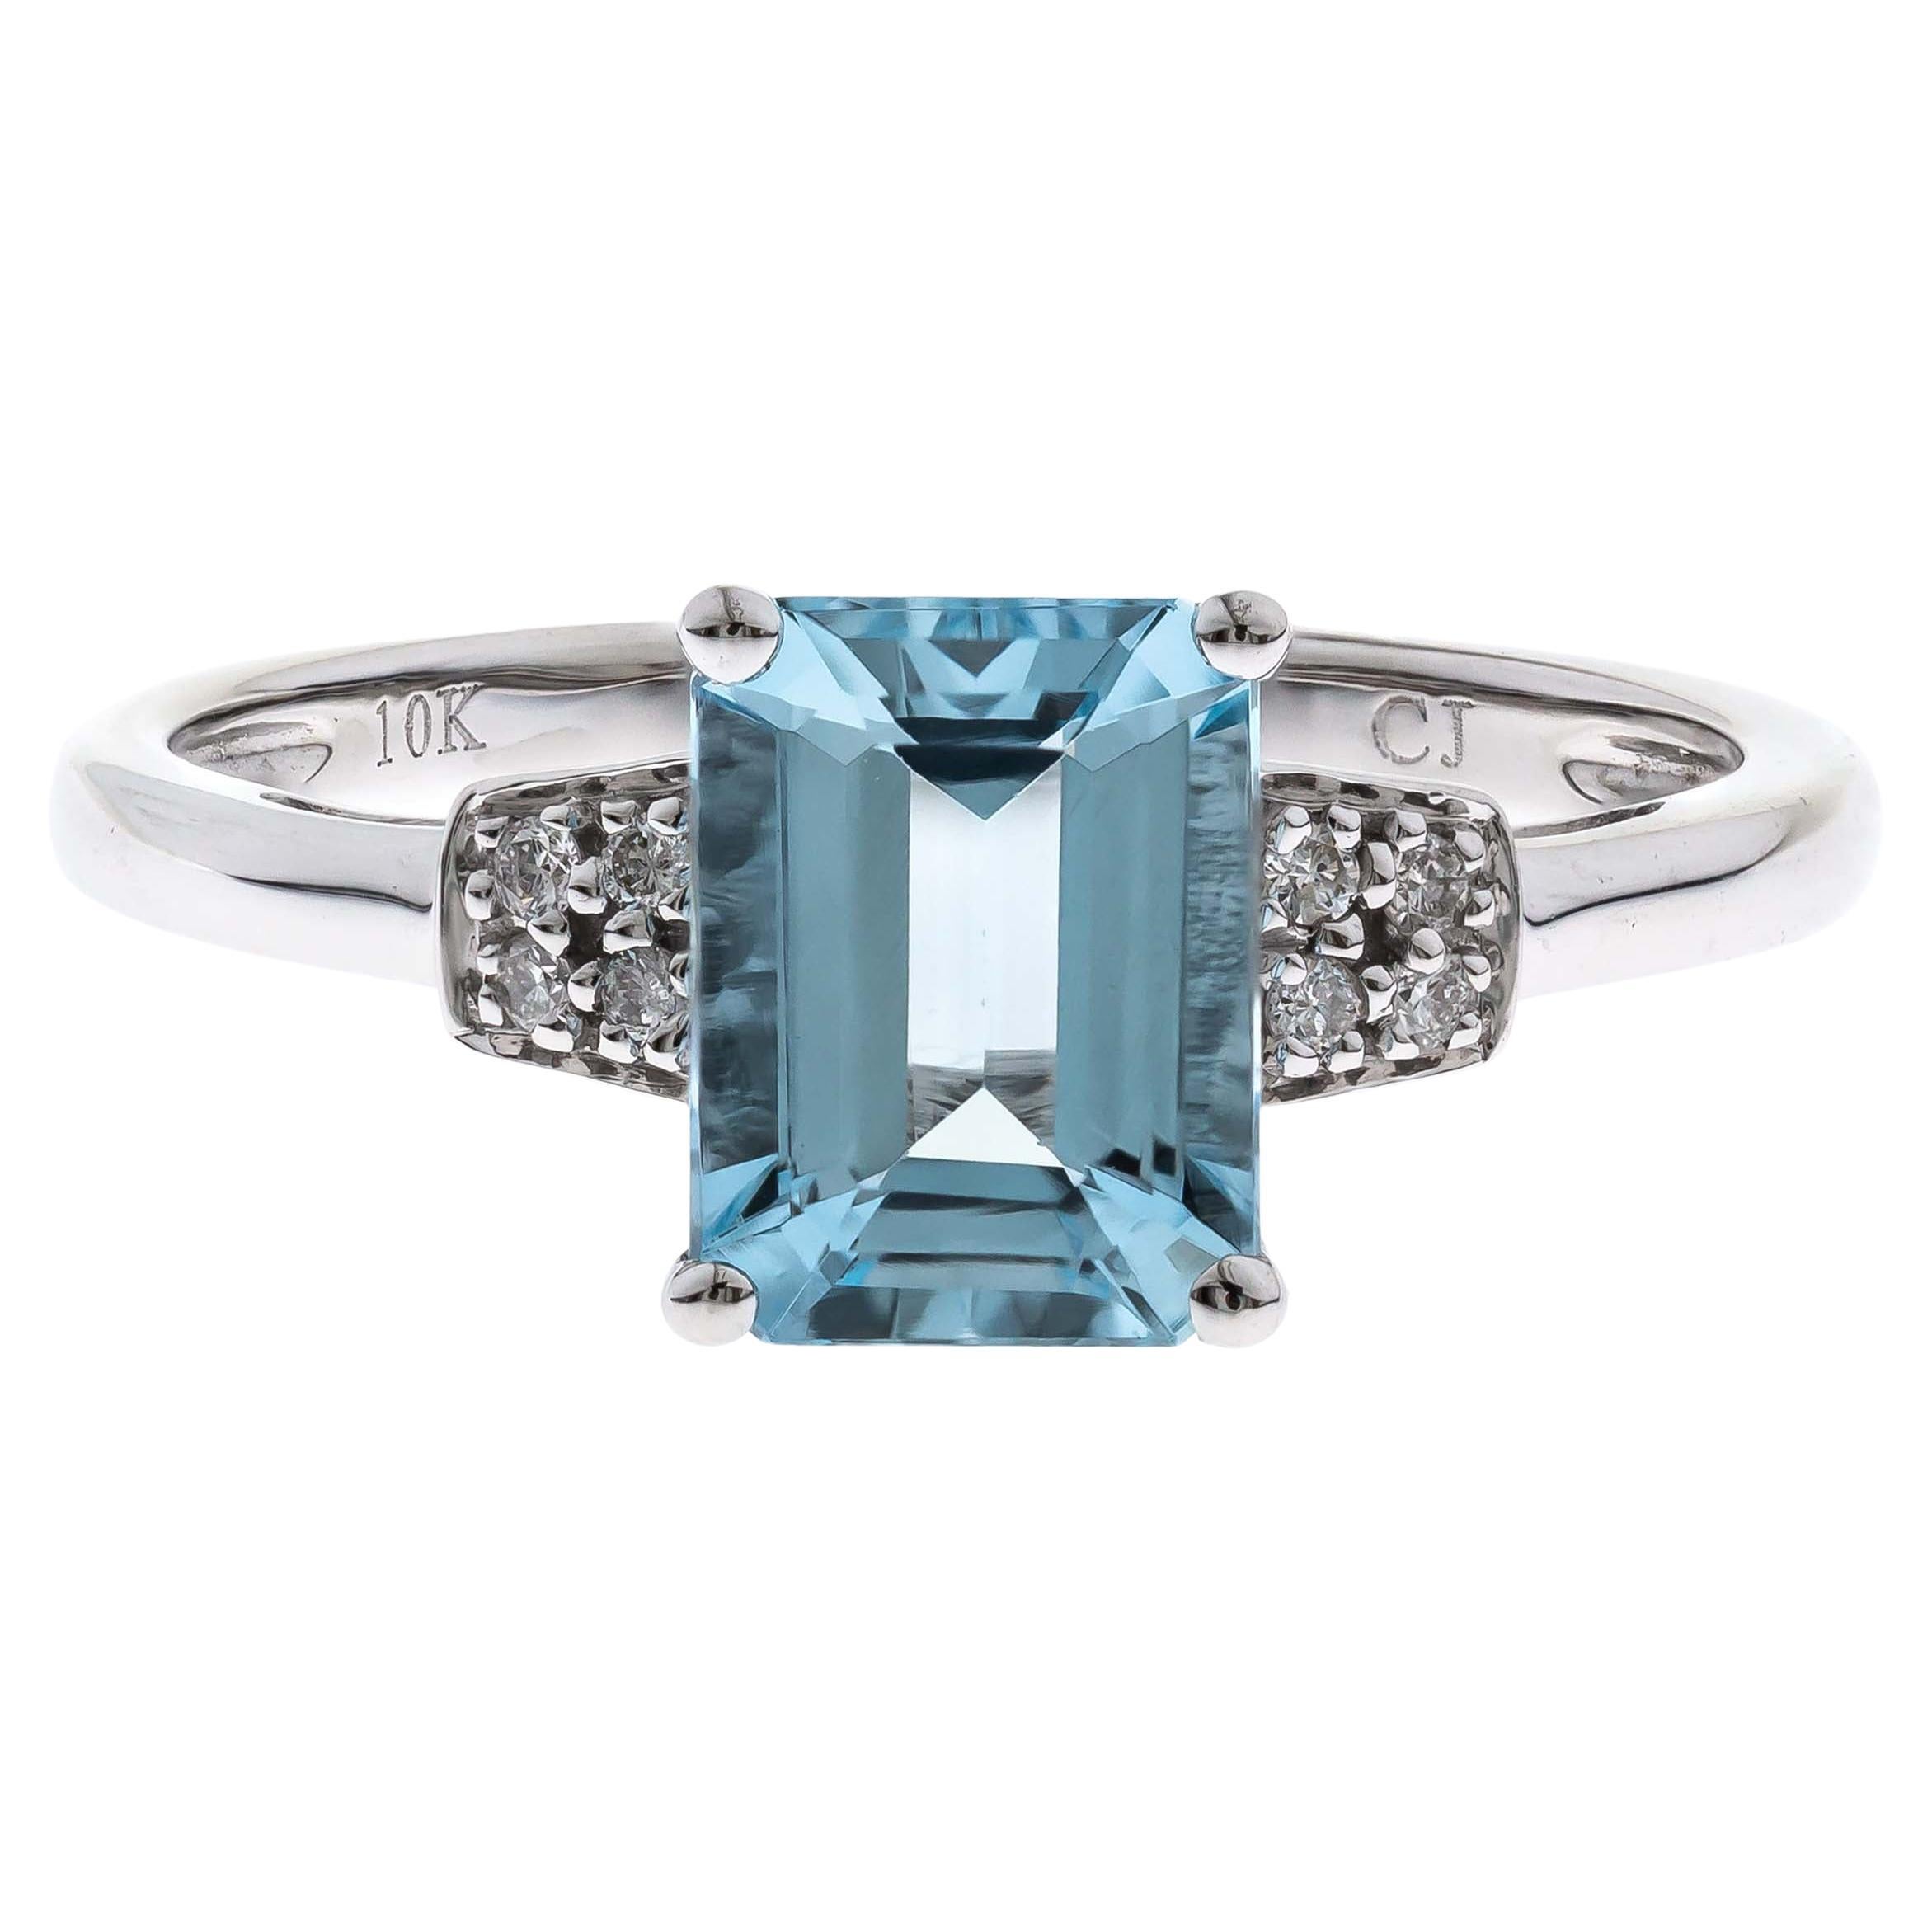 1.25 Carat Aquamarine Emerald Cut Diamond Accents 10K White Gold Engagement Ring For Sale